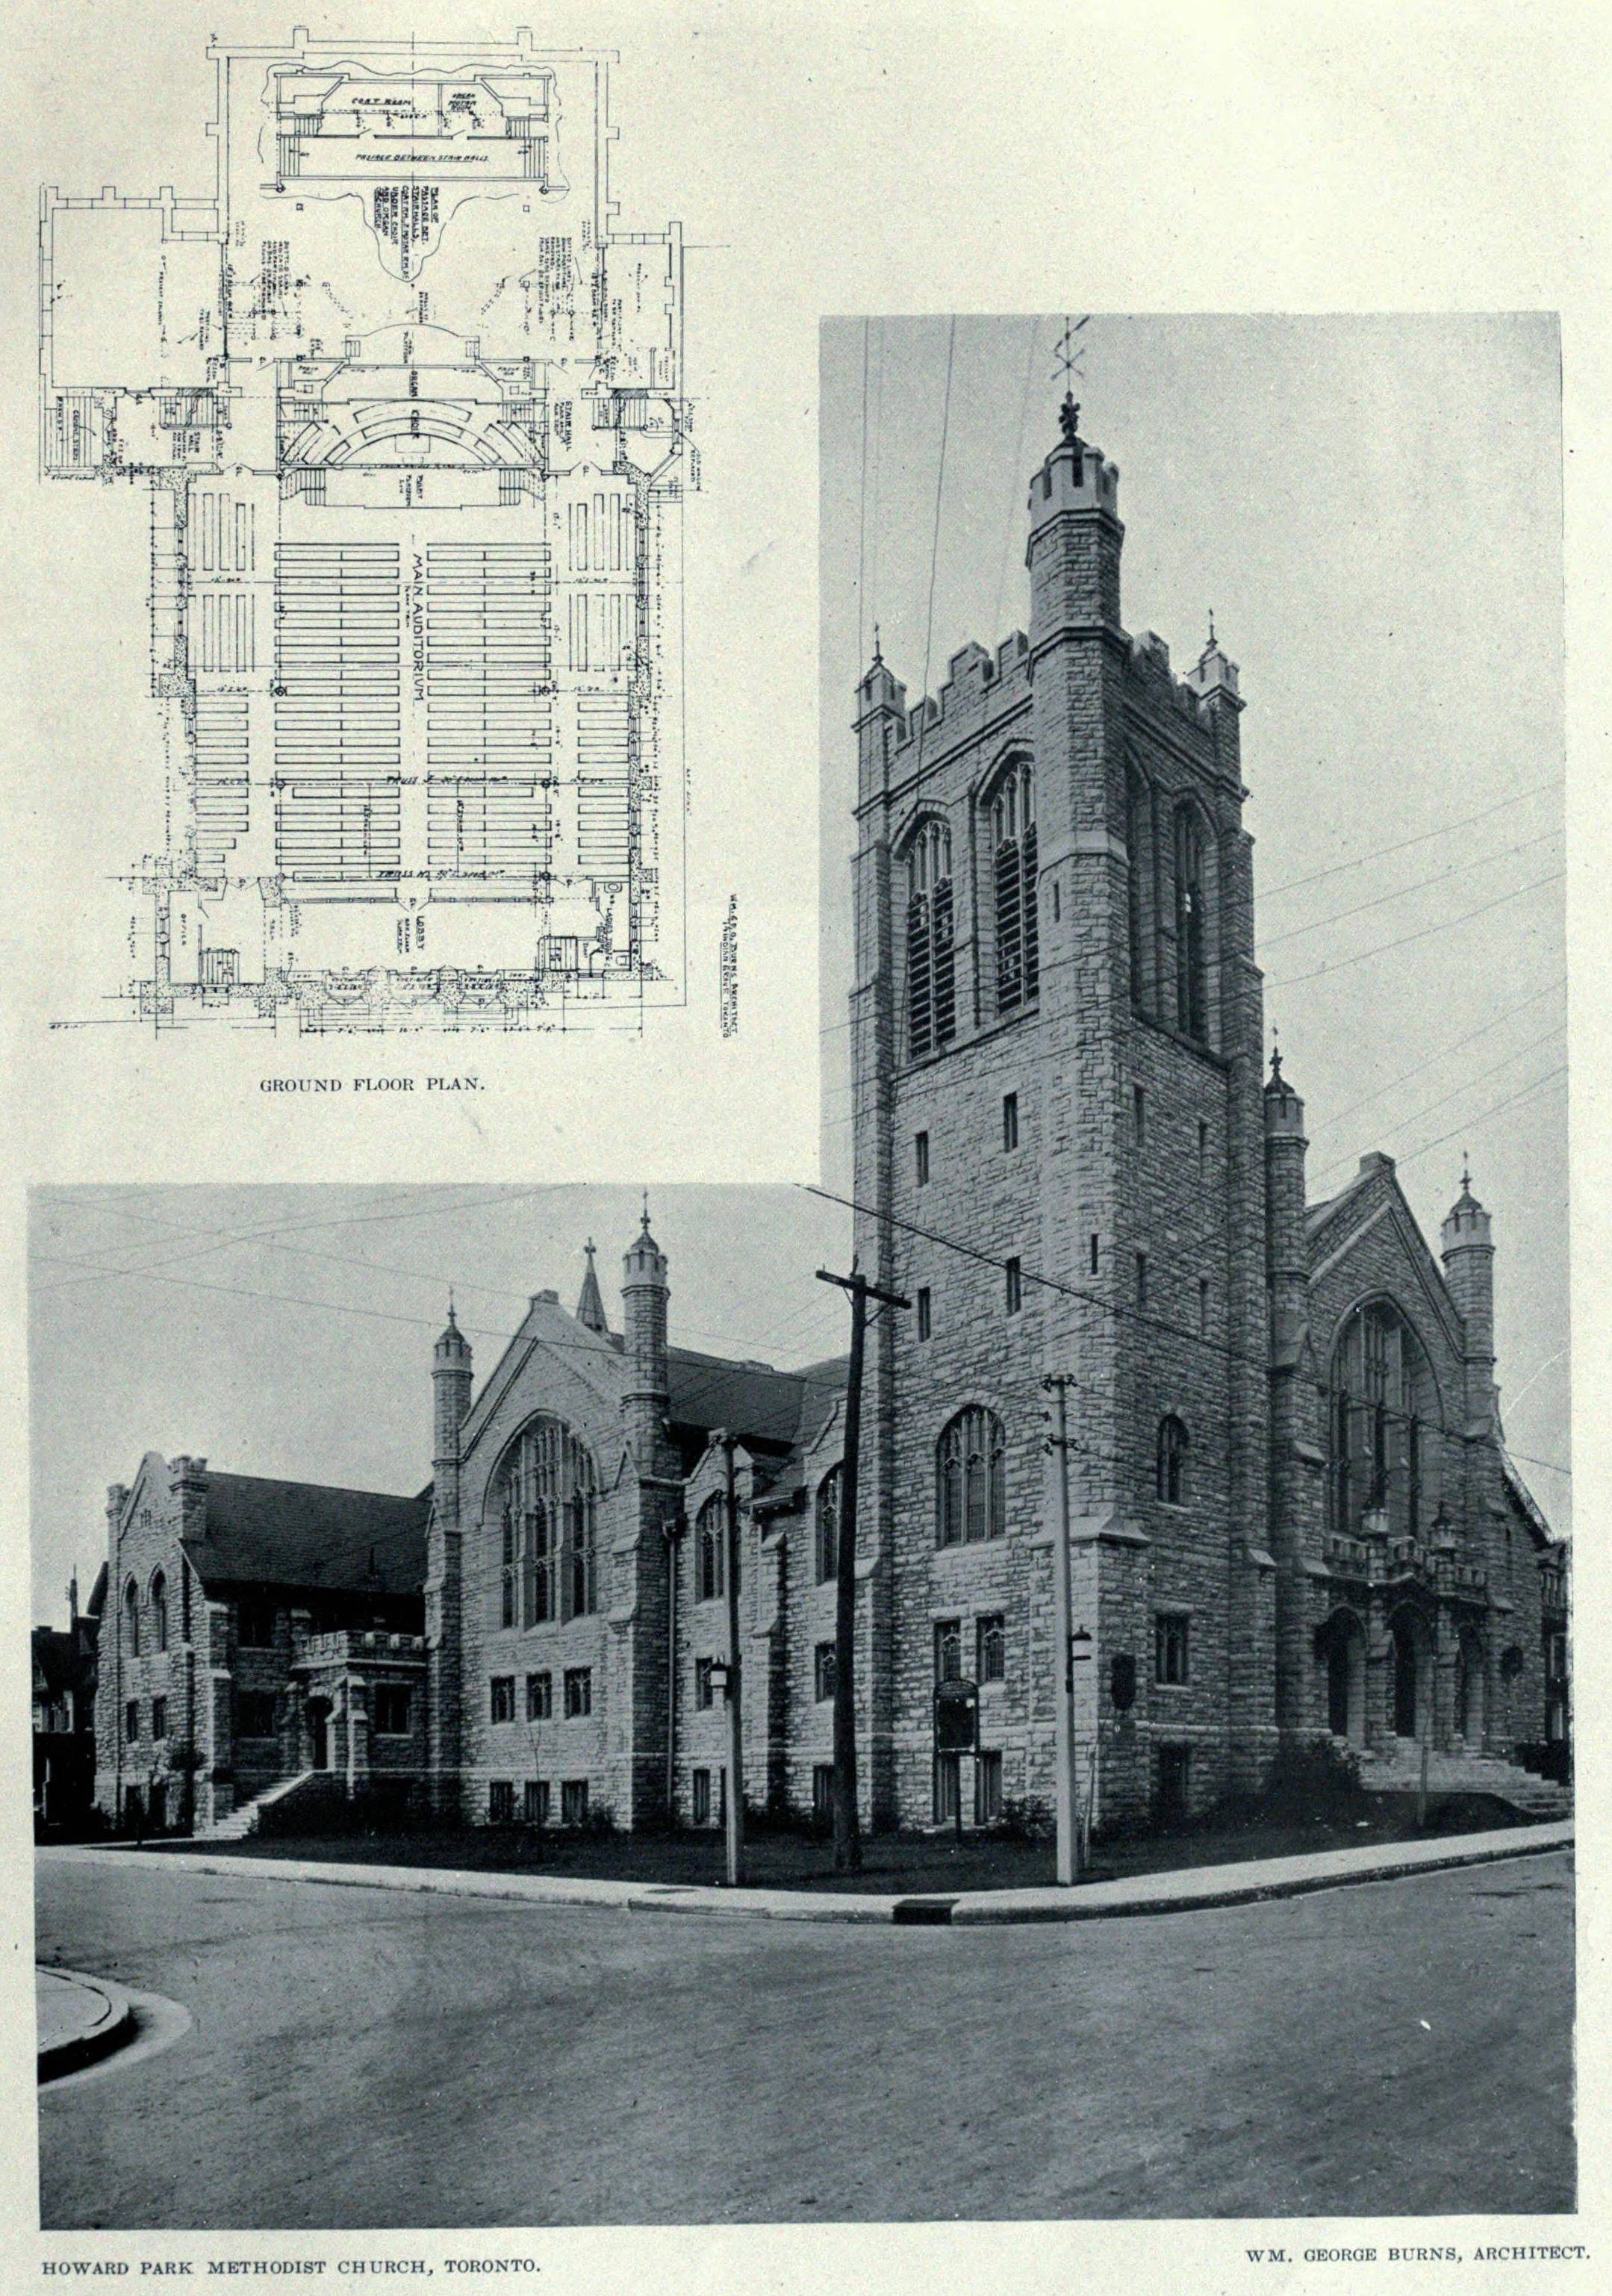 Then and Now: Howard Park Methodist Church | UrbanToronto